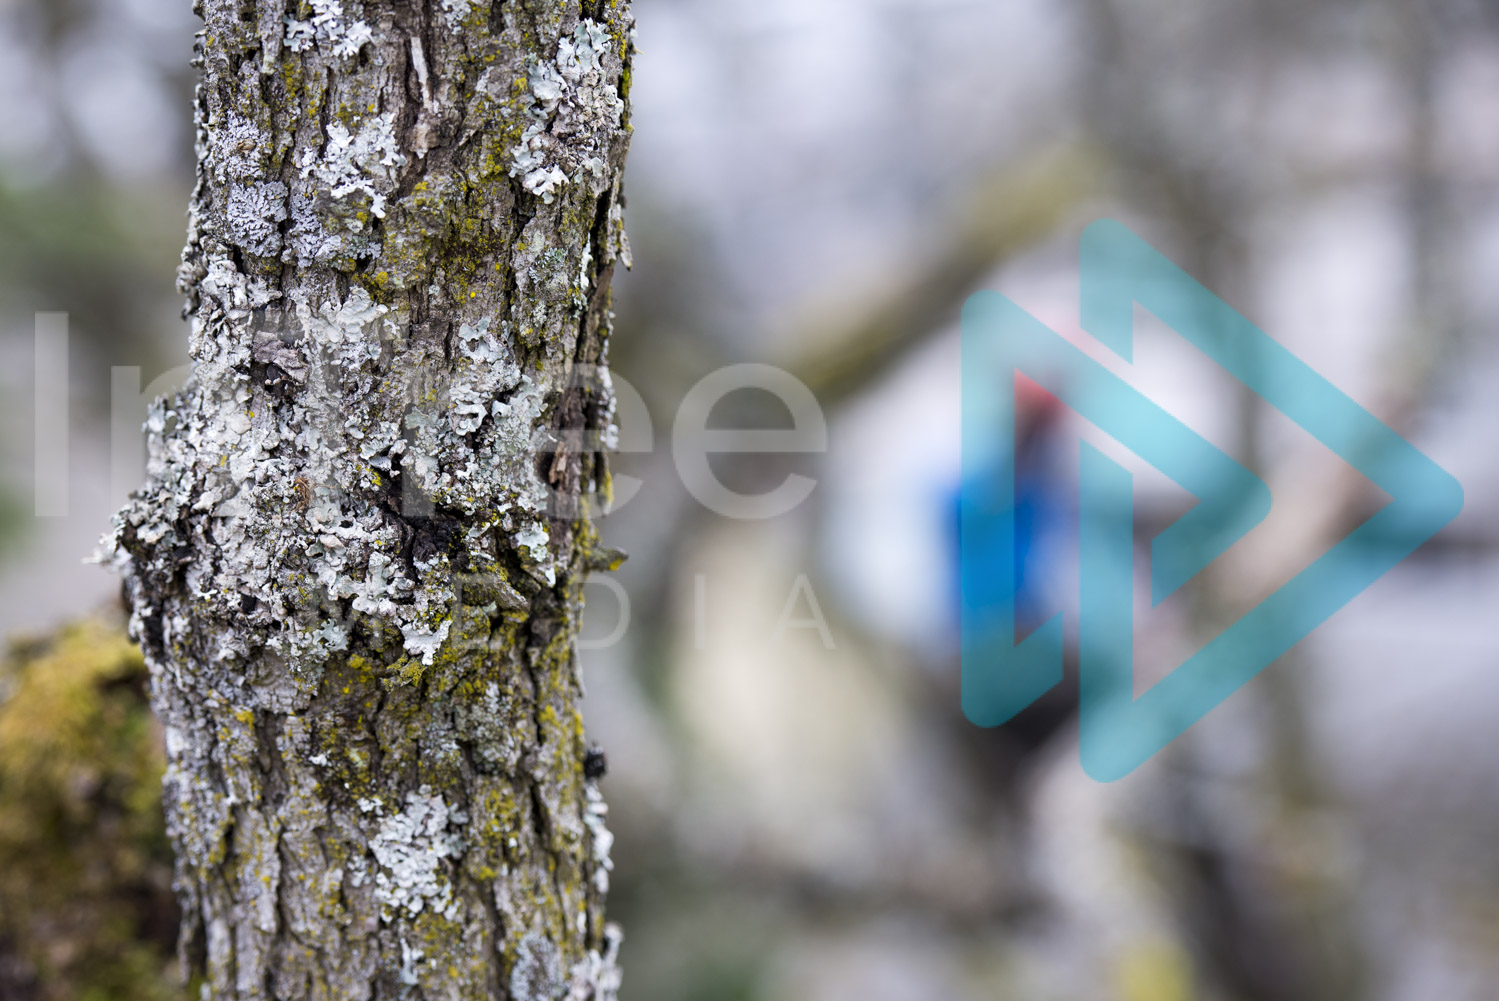 Garry Oak branch with arborist blurred in background InTree arborist image 001-21-5953